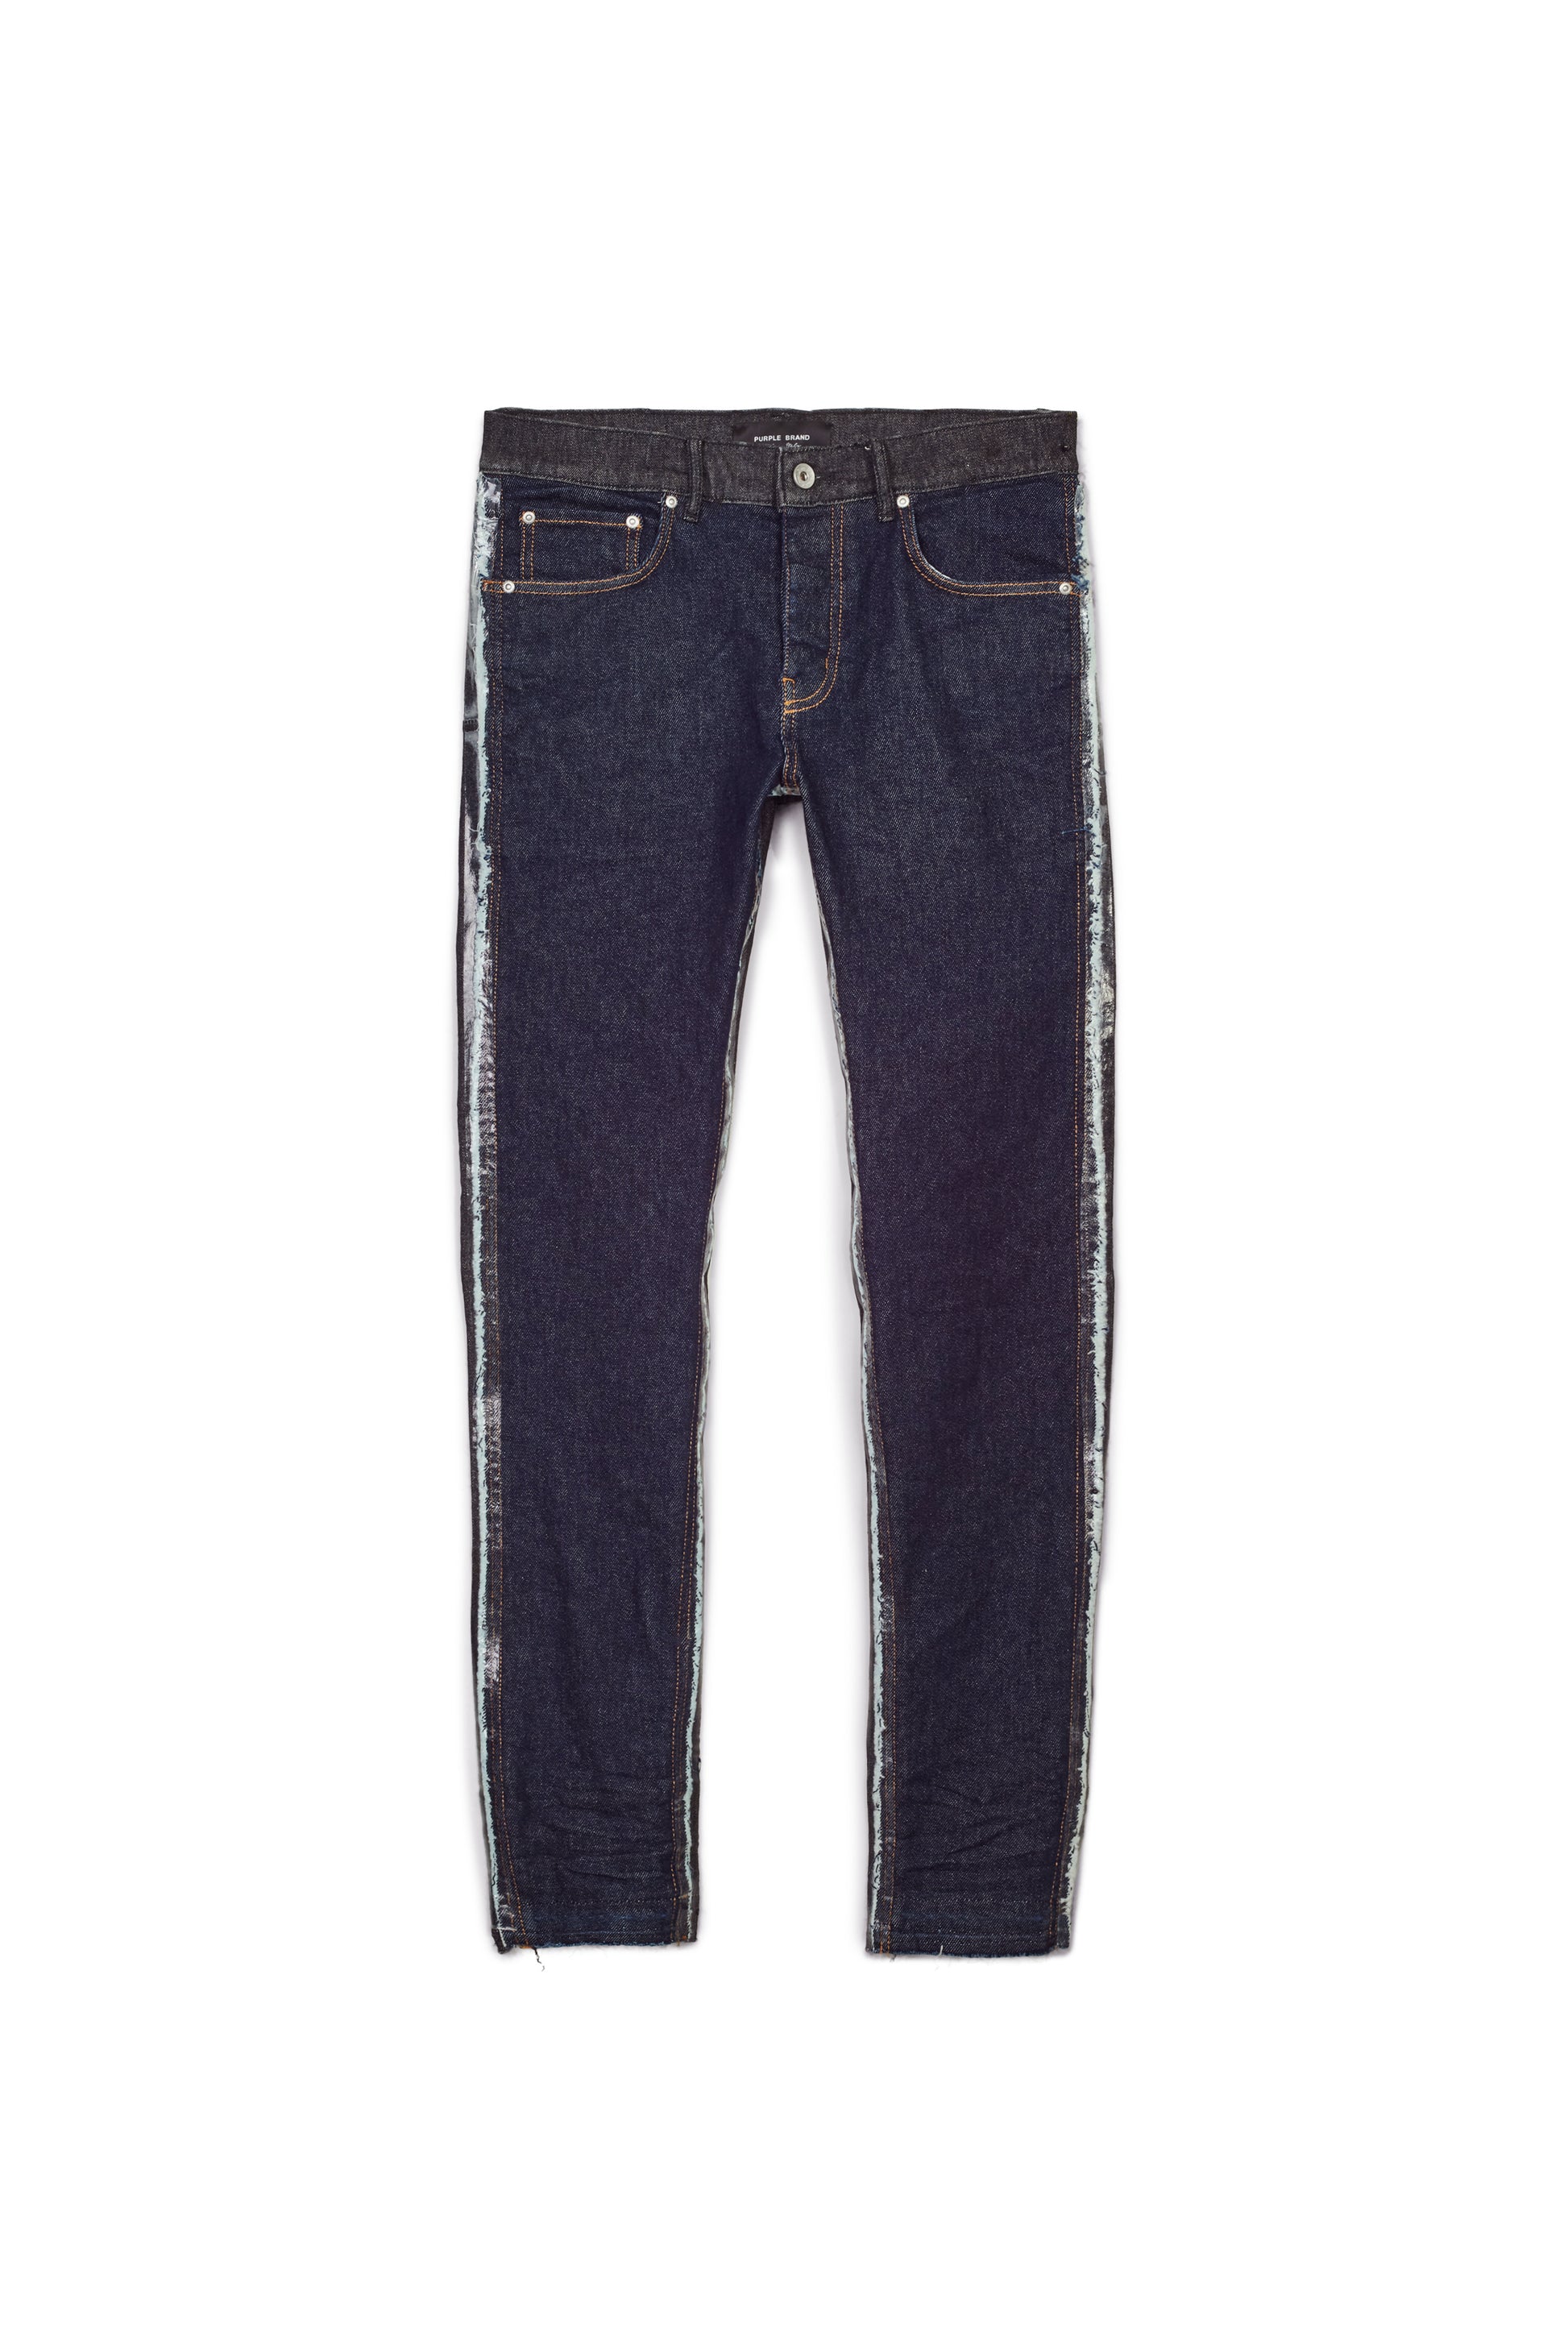 PURPLE BRAND - Men's Low Rise Skinny Jean - Style No. P001 - Raw Indigo Black Framis Fray - Front